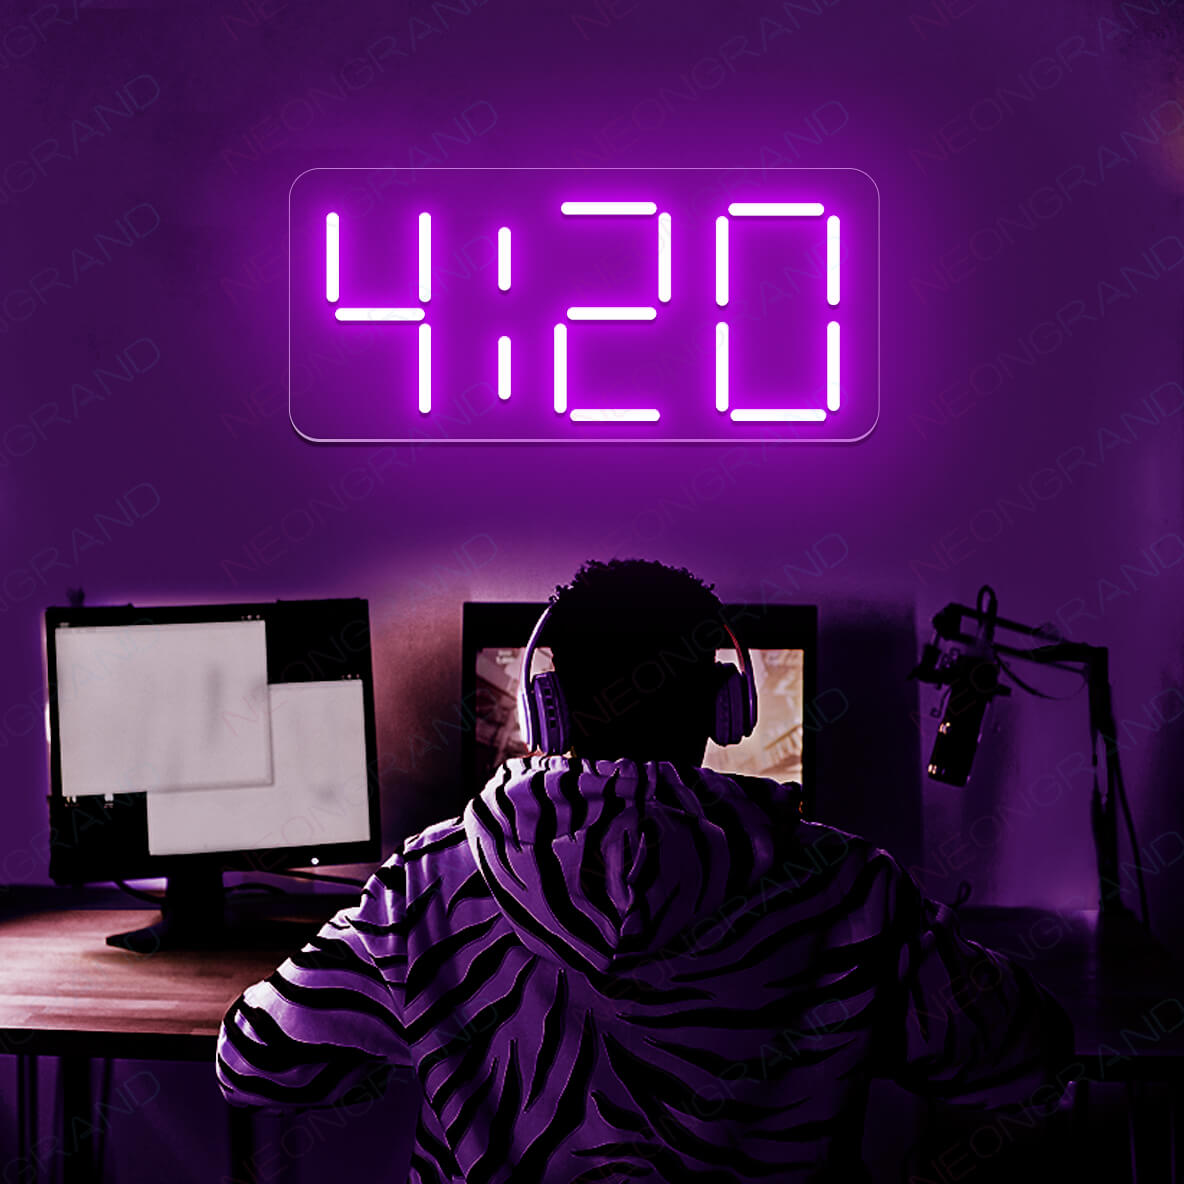 420 Neon Sign Marijuana Cannabis Led Light purple